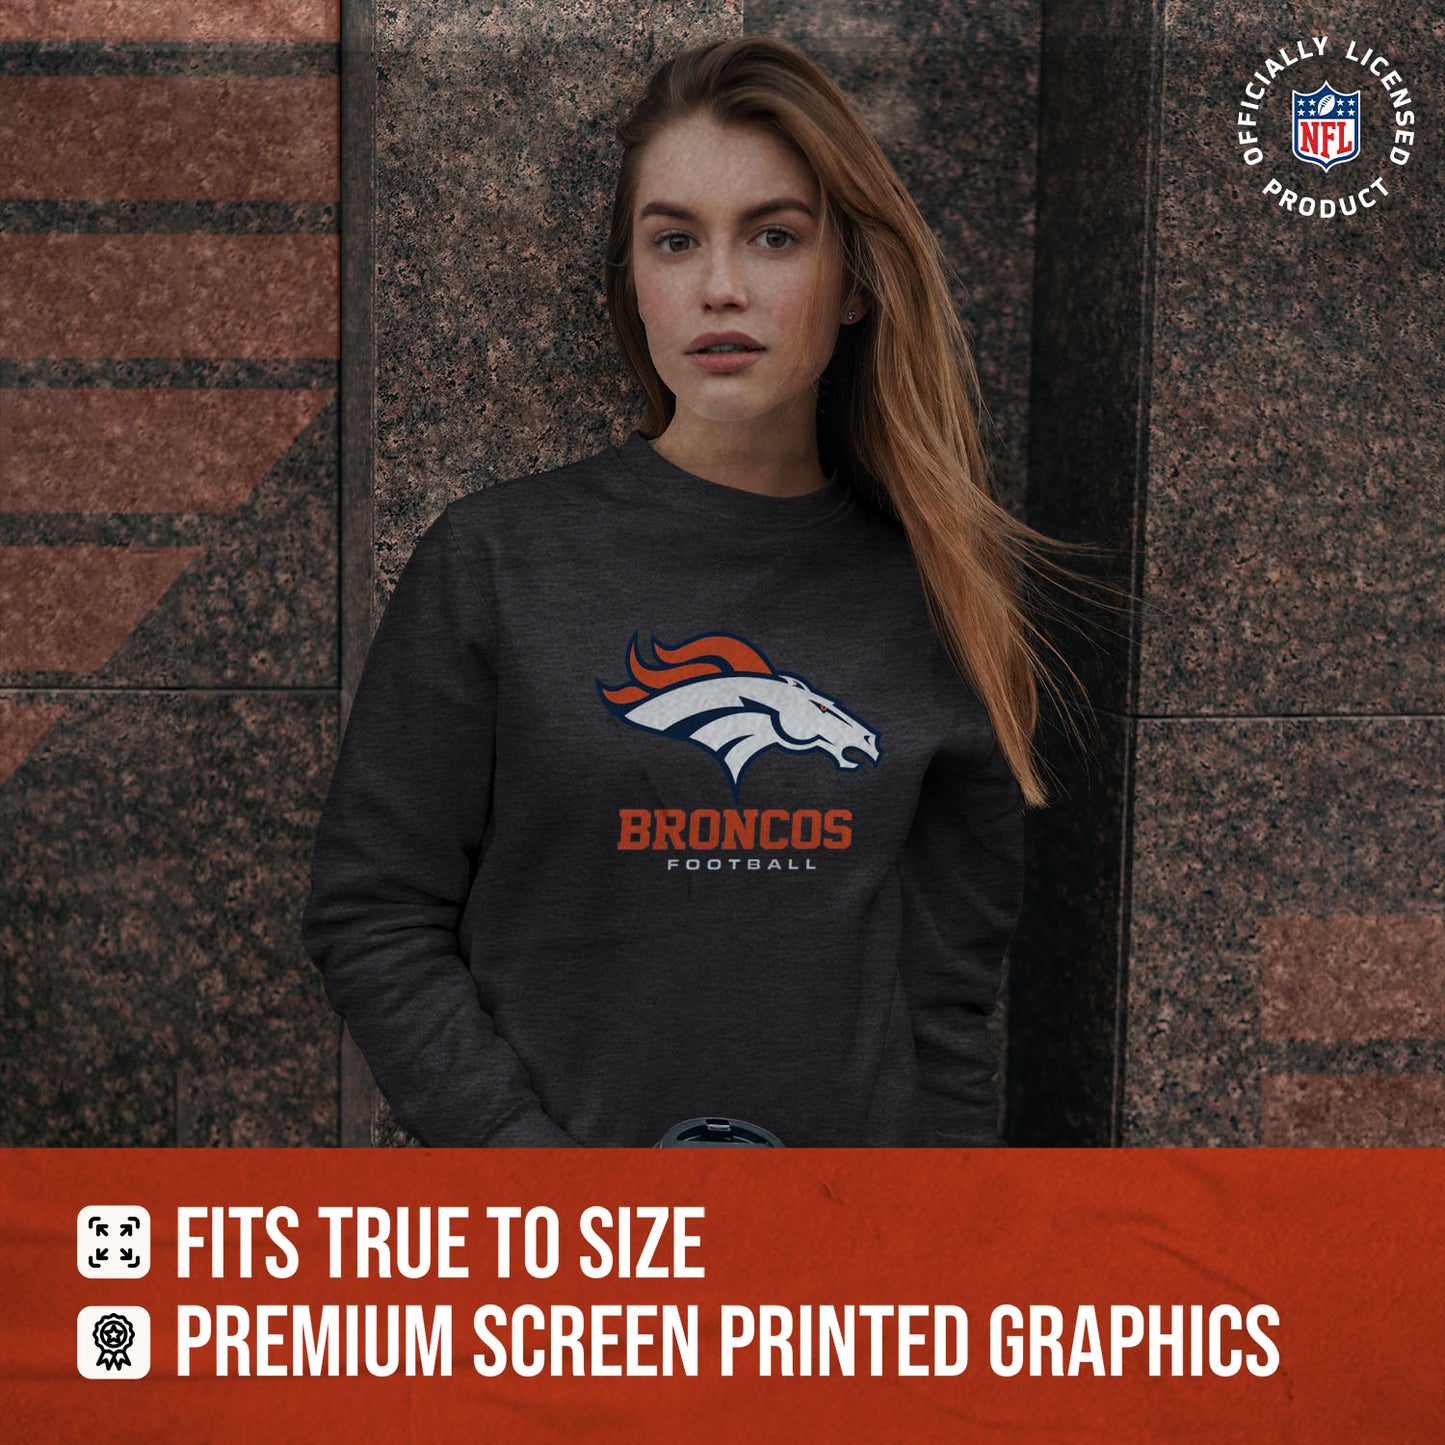 Denver Broncos Women's NFL Ultimate Fan Logo Slouchy Crewneck -Tagless Fleece Lightweight Pullover - Charcoal